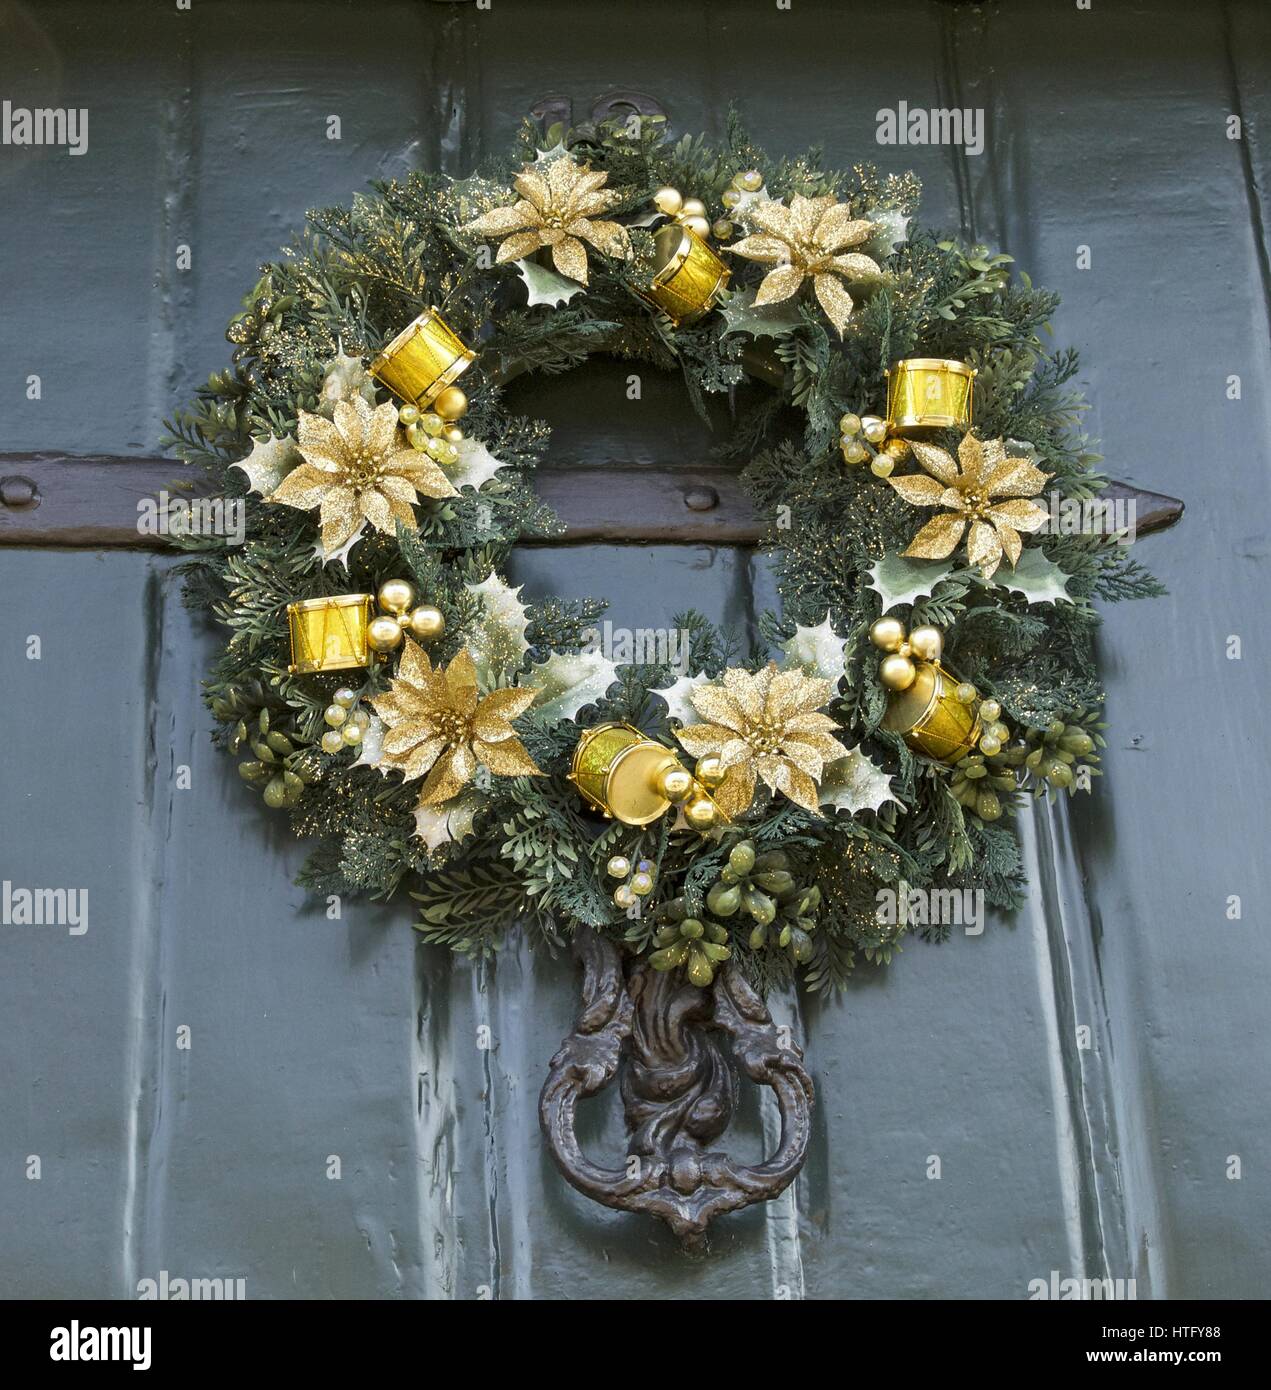 Christmas door wreaths Stock Photo - Alamy